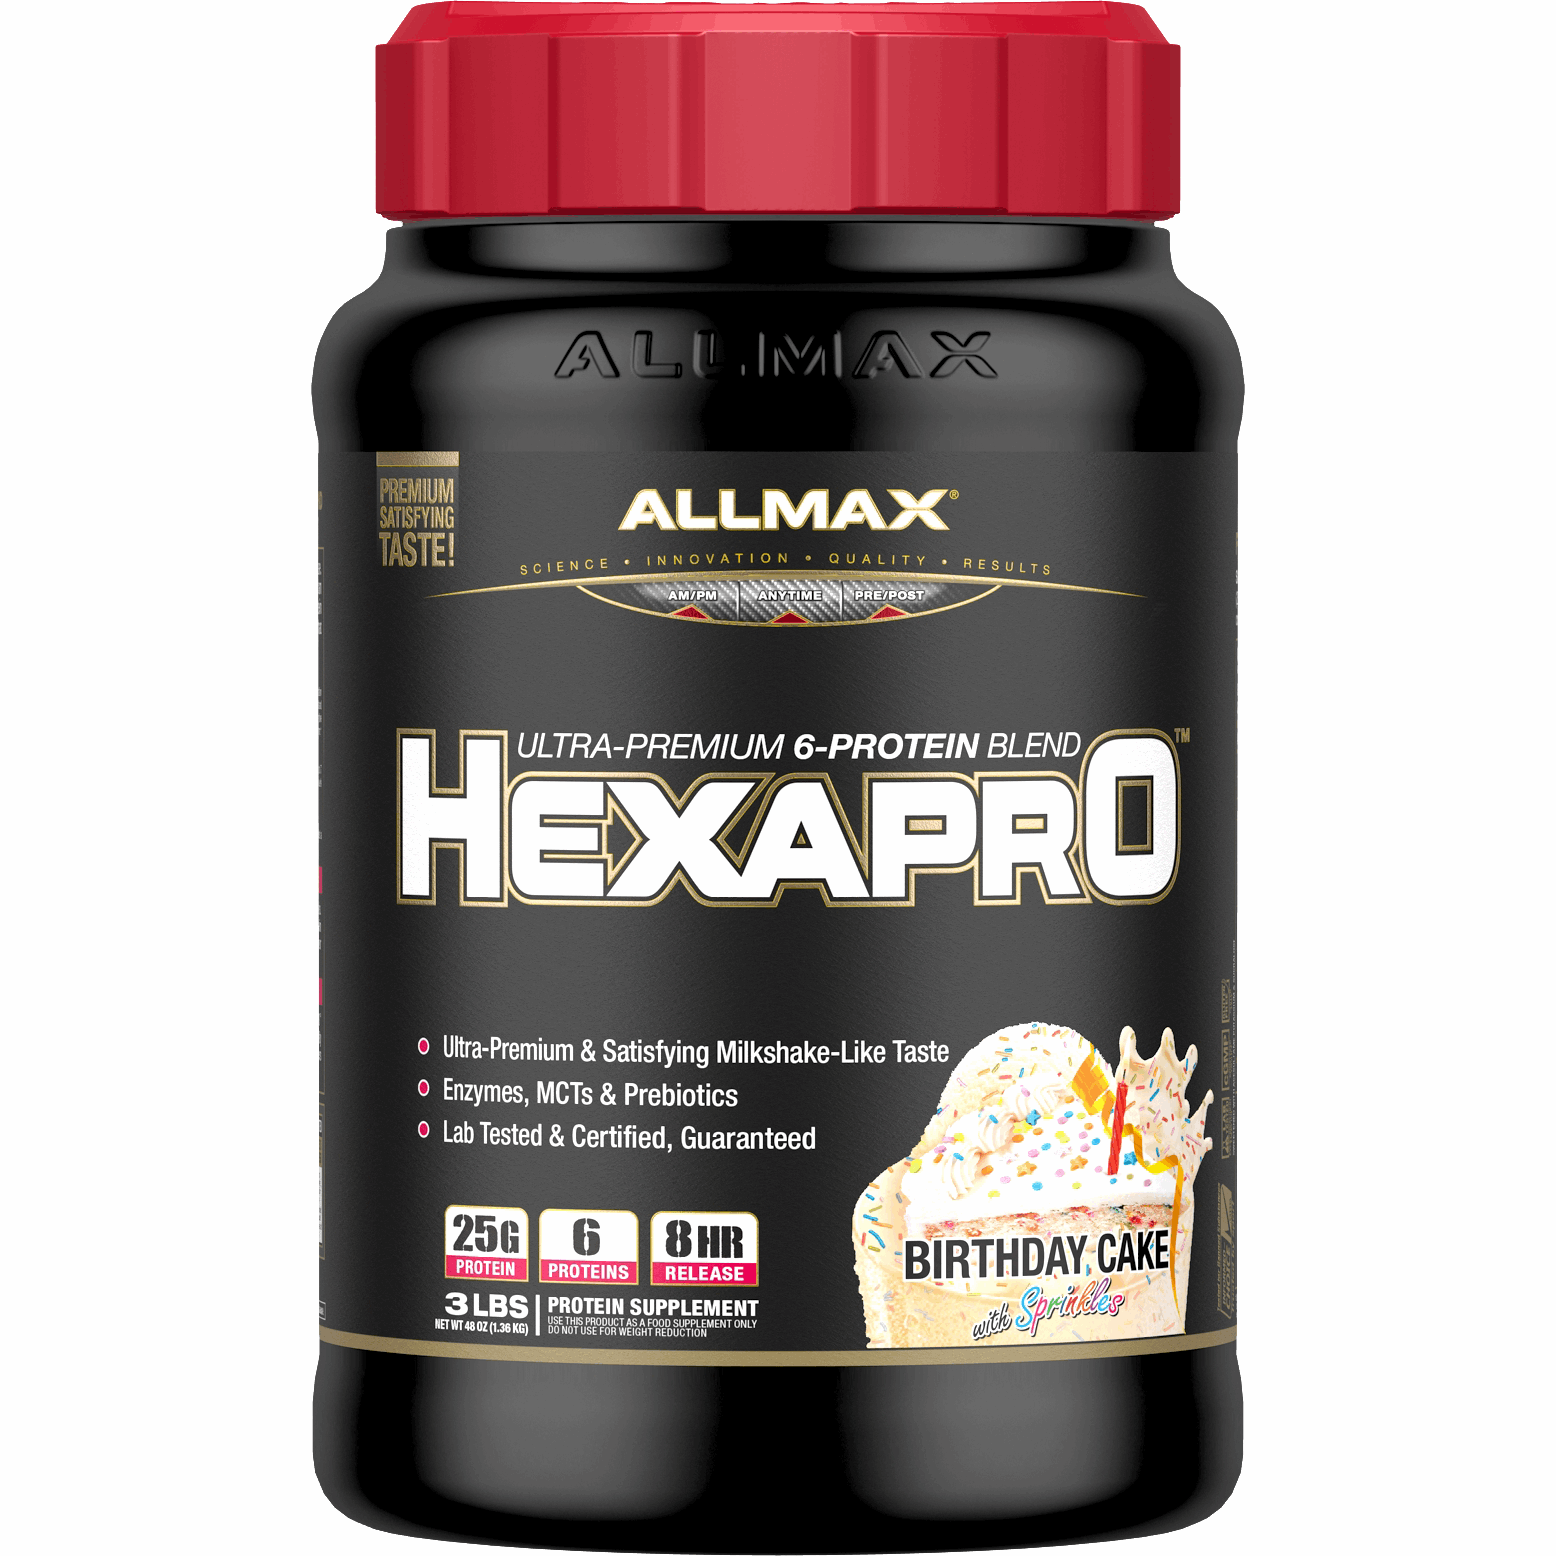 ALLMAX Hexapro (2lbs) allmax-hexapro-3lbs Whey Protein Blend Birthday Cake Allmax Nutrition